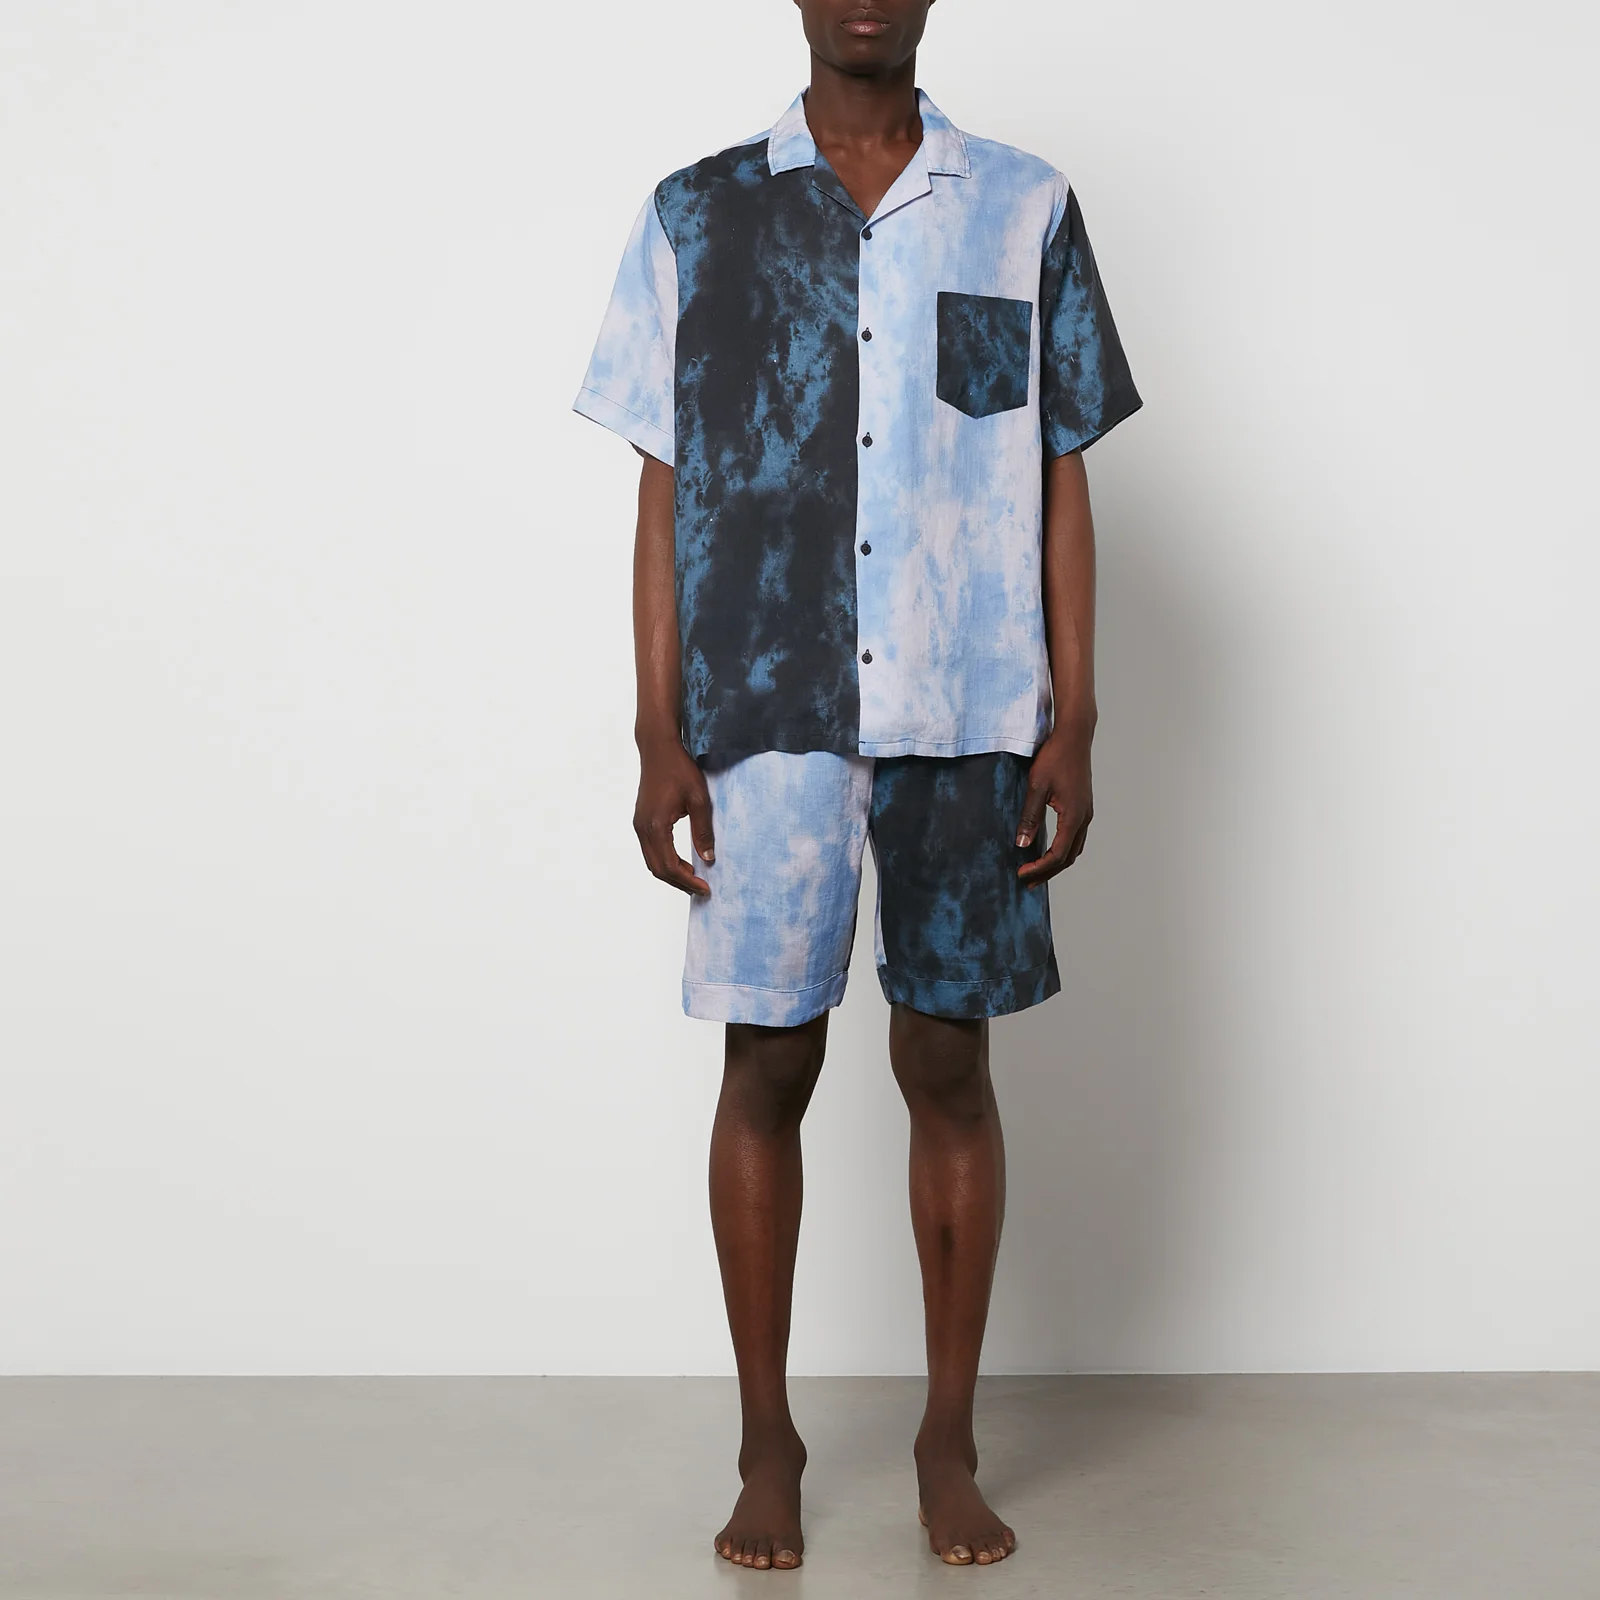 Desmond & Dempsey Men's Summer Dusk Cuban Pyjama Set - Patchwork Navy/Sky Blue Image 1